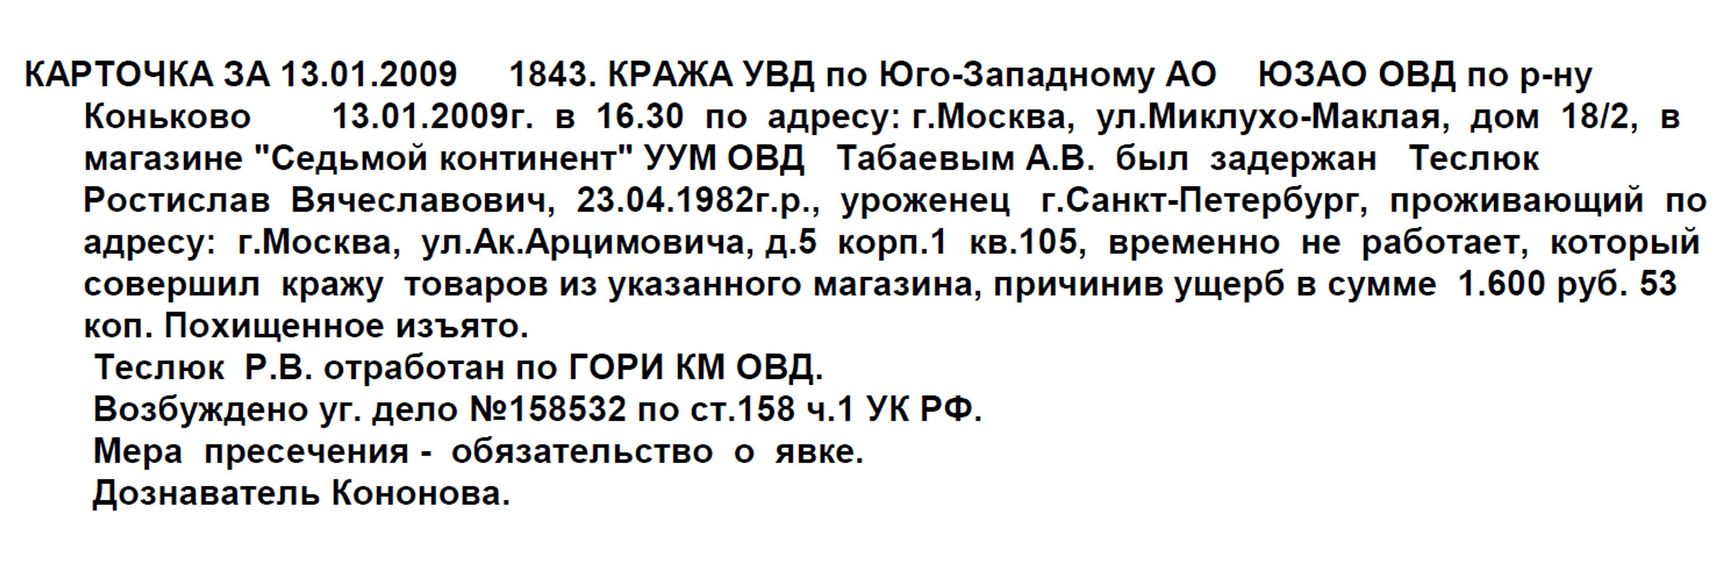 Moscow Main Internal Affairs Directorate bulletins